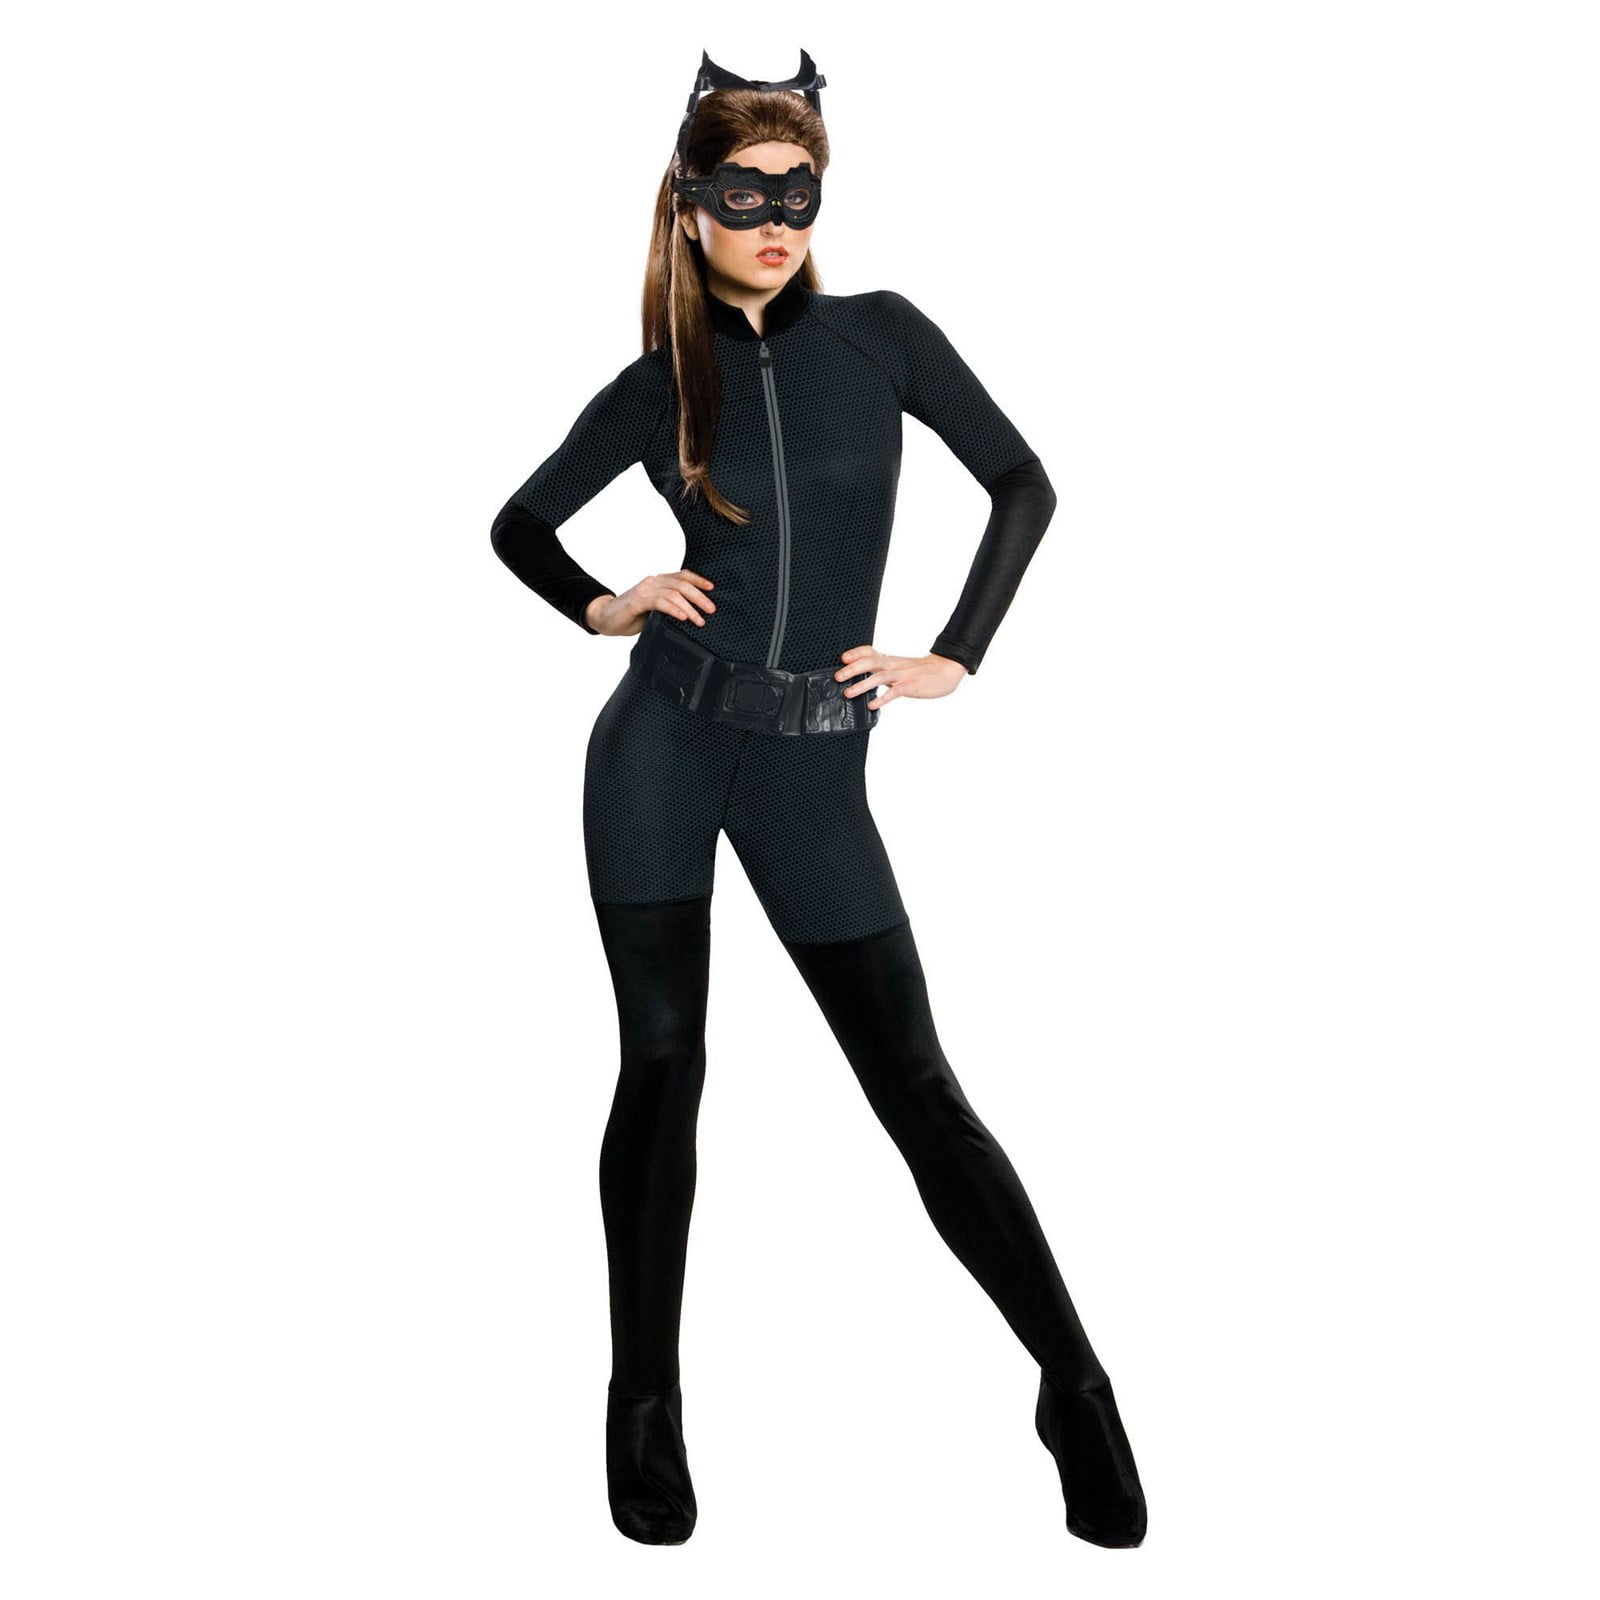 Catwoman Women's Halloween Fancy-Dress Costume for Adult, M